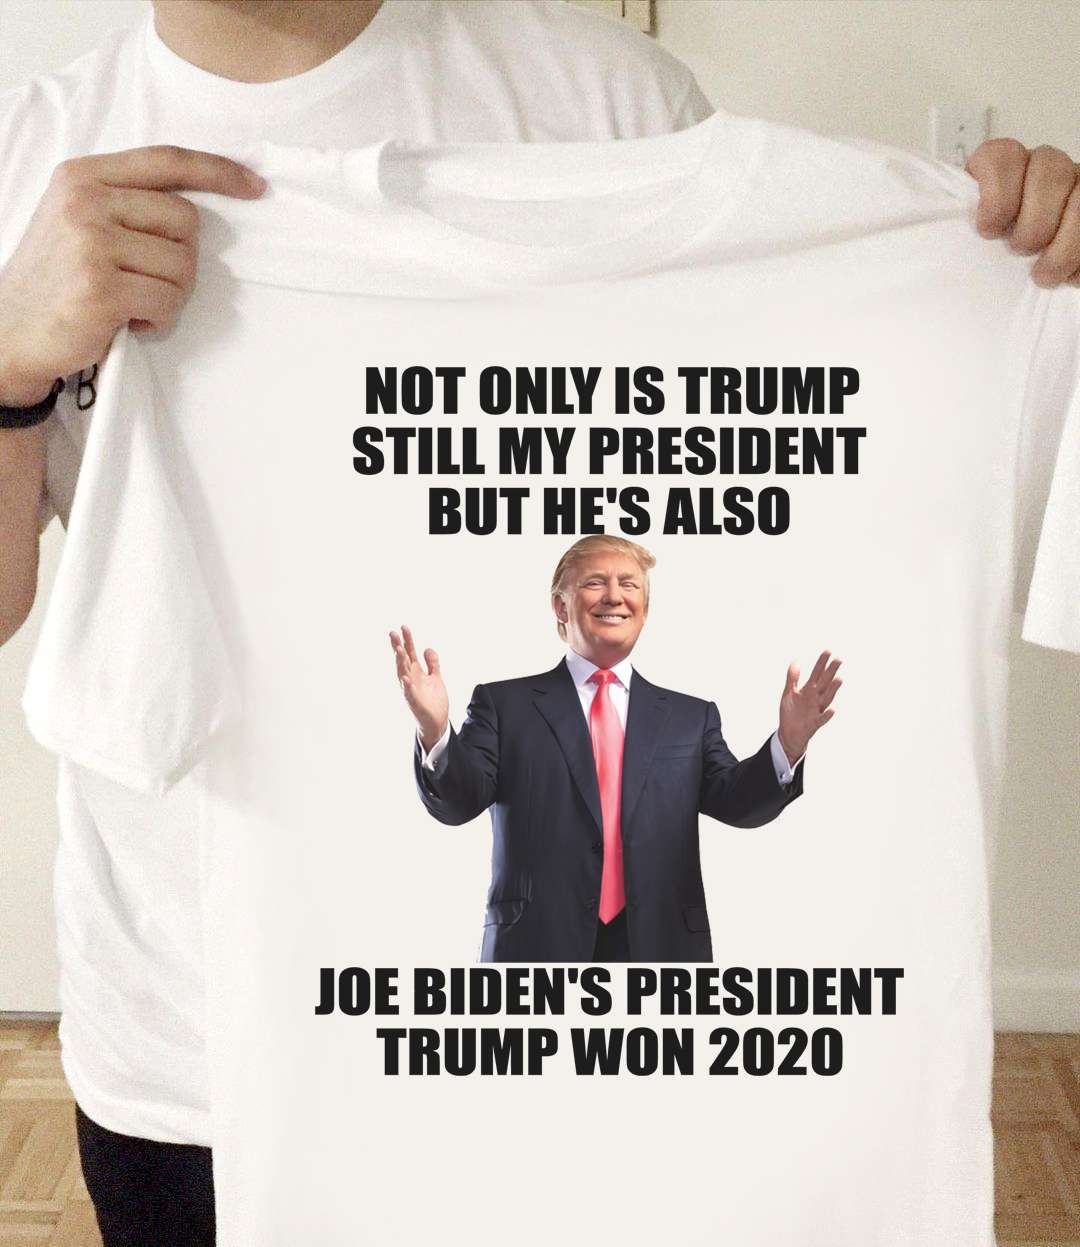 Not only is Trump still my president but he's also Joe Biden's president - Trump won 2020